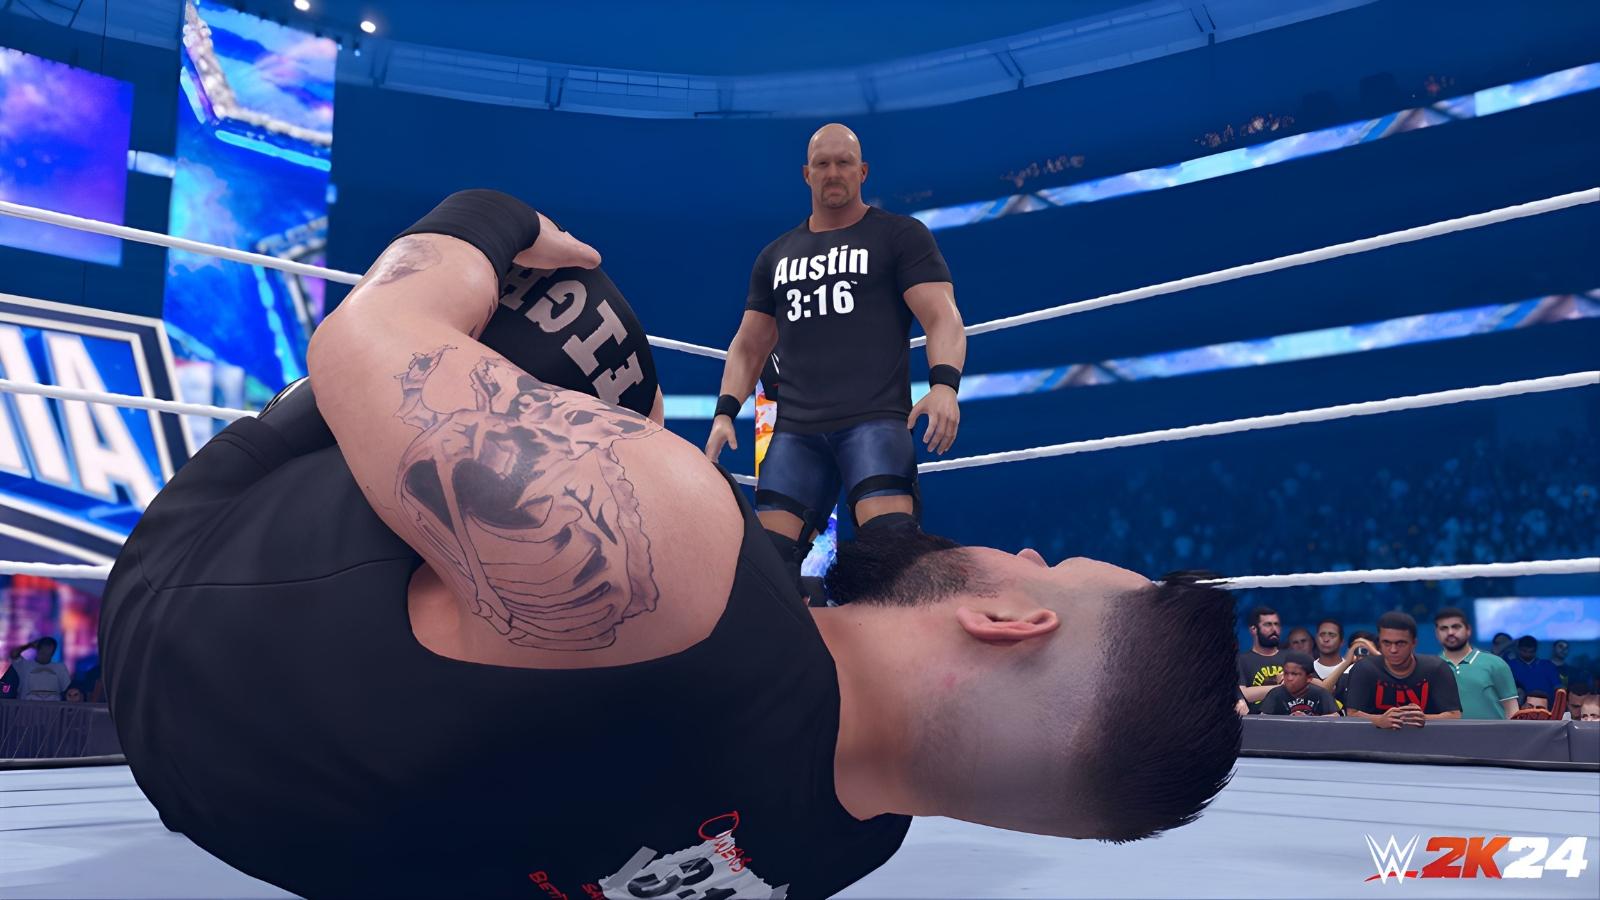 Steve Austin beating up Kevin Owens in WWE 2K24